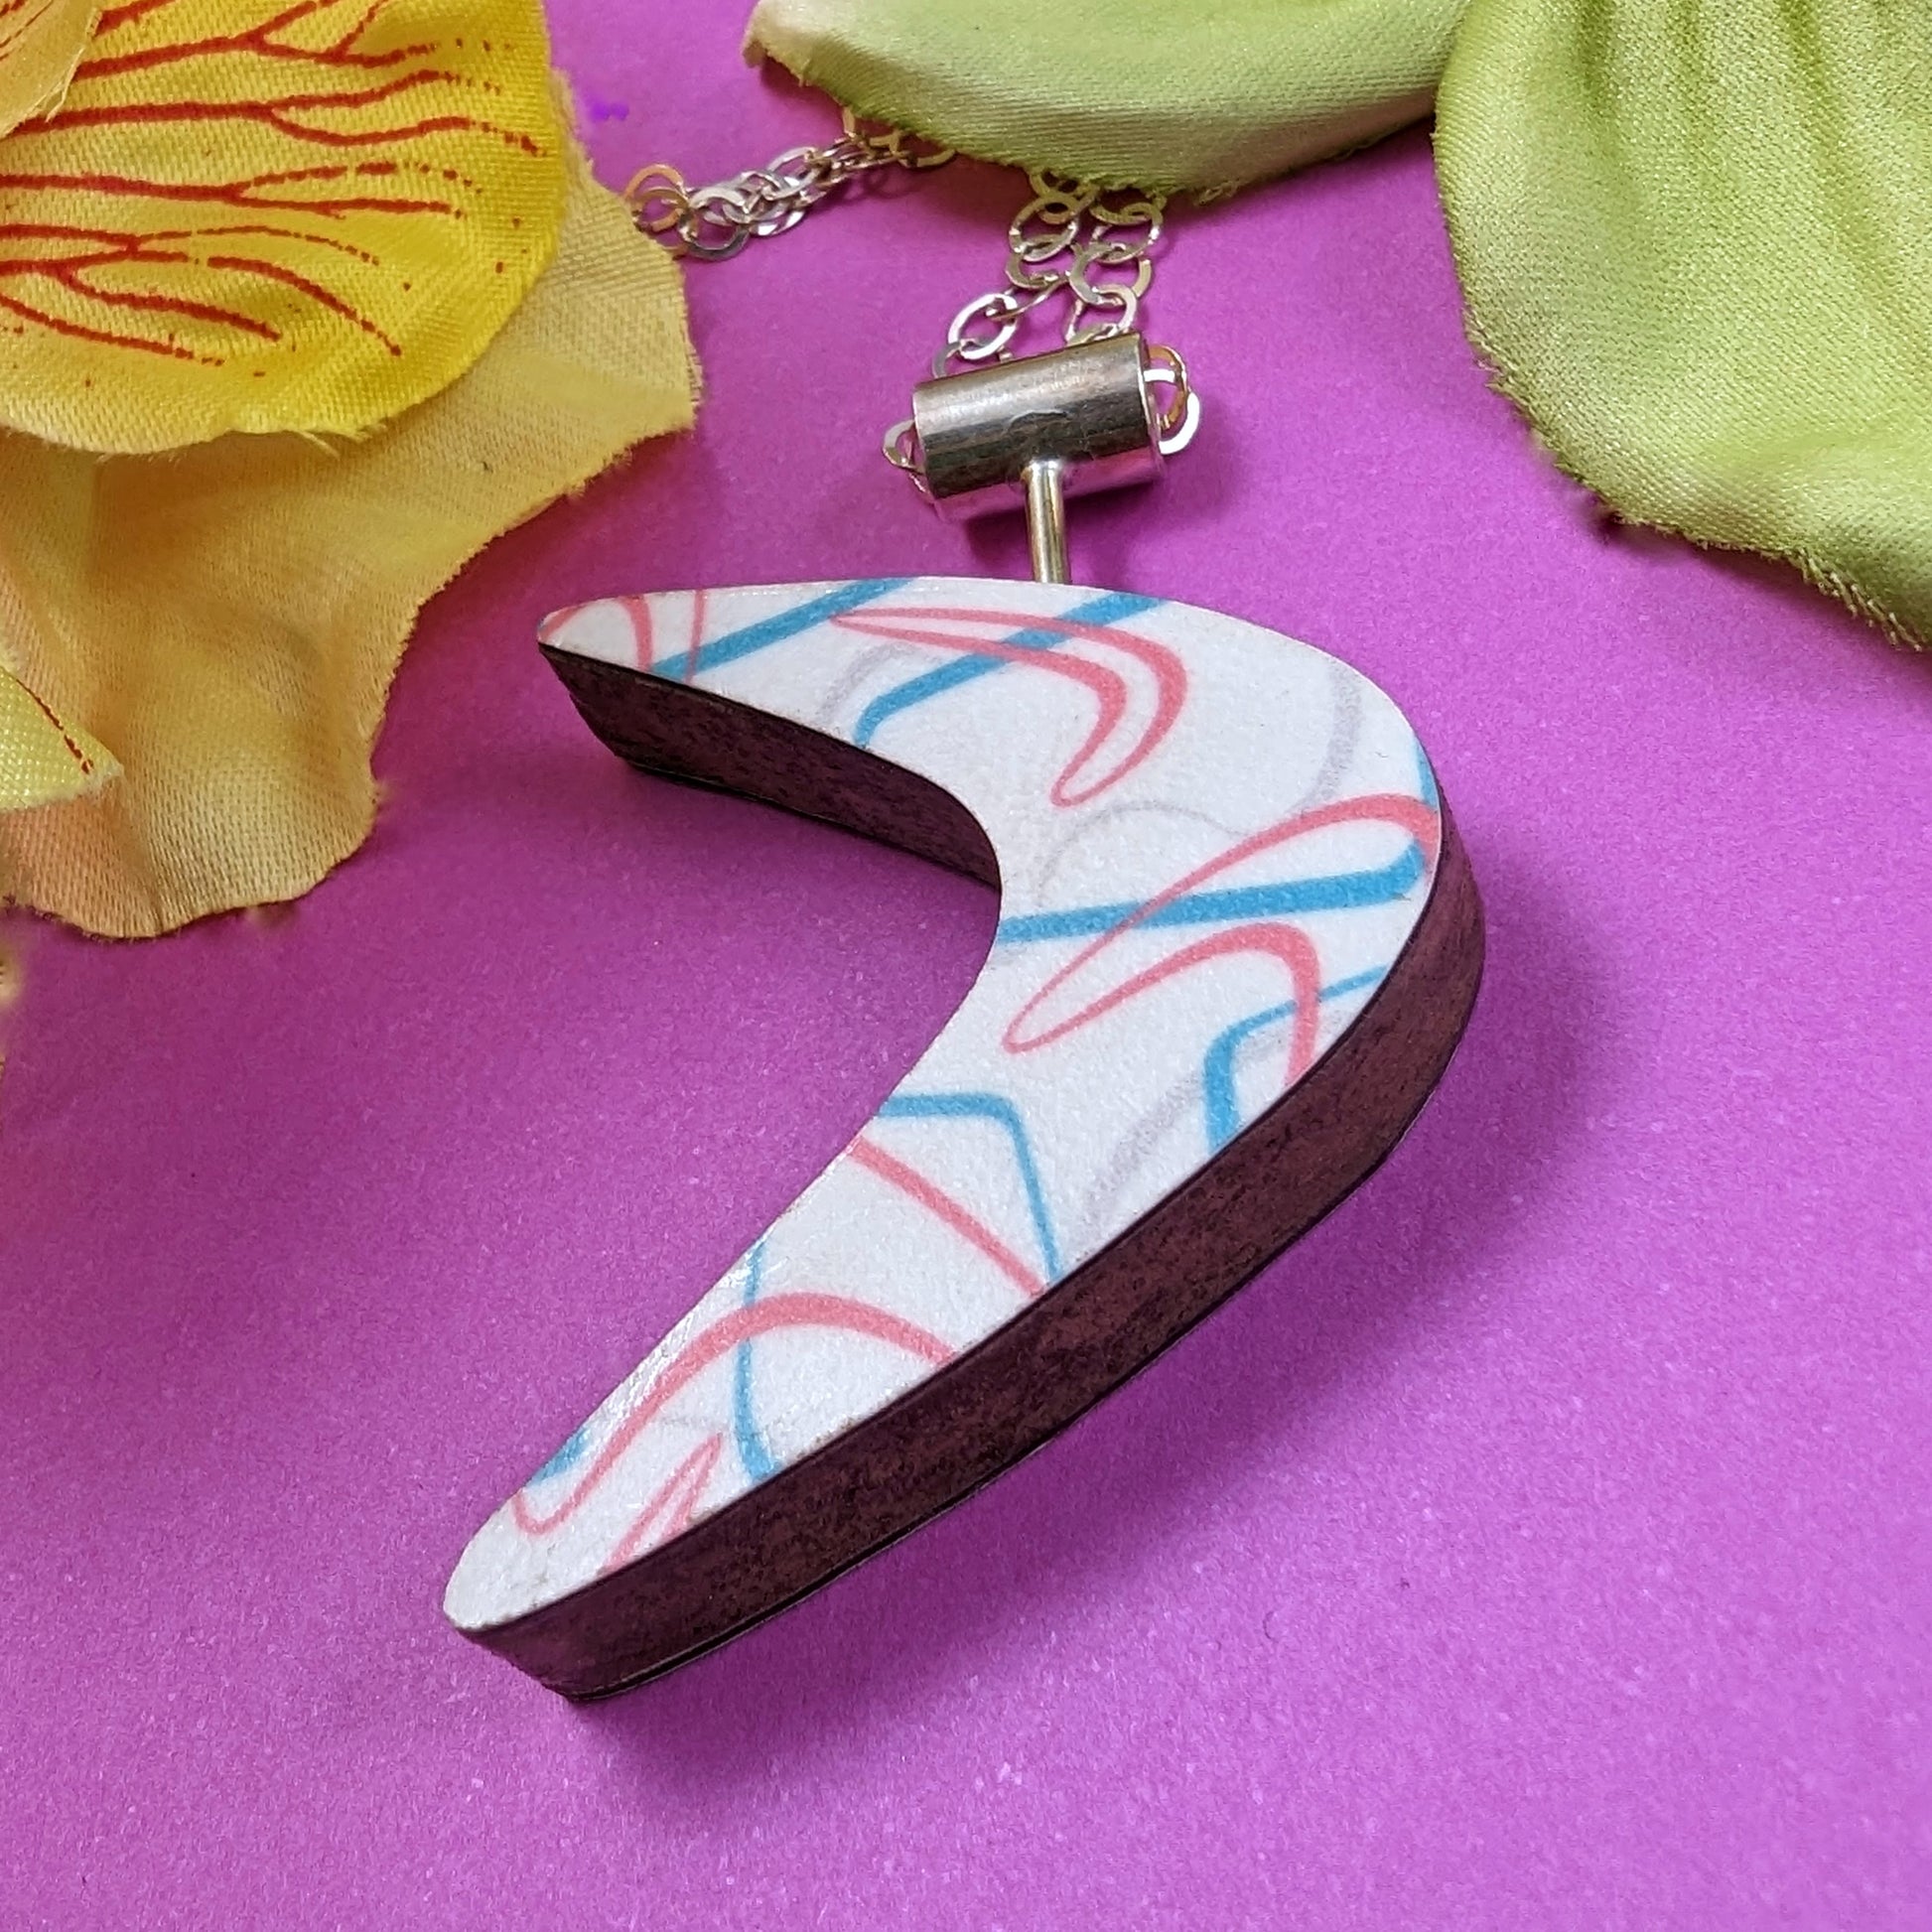 Boomerang shaped laminate on wood necklace on pink background